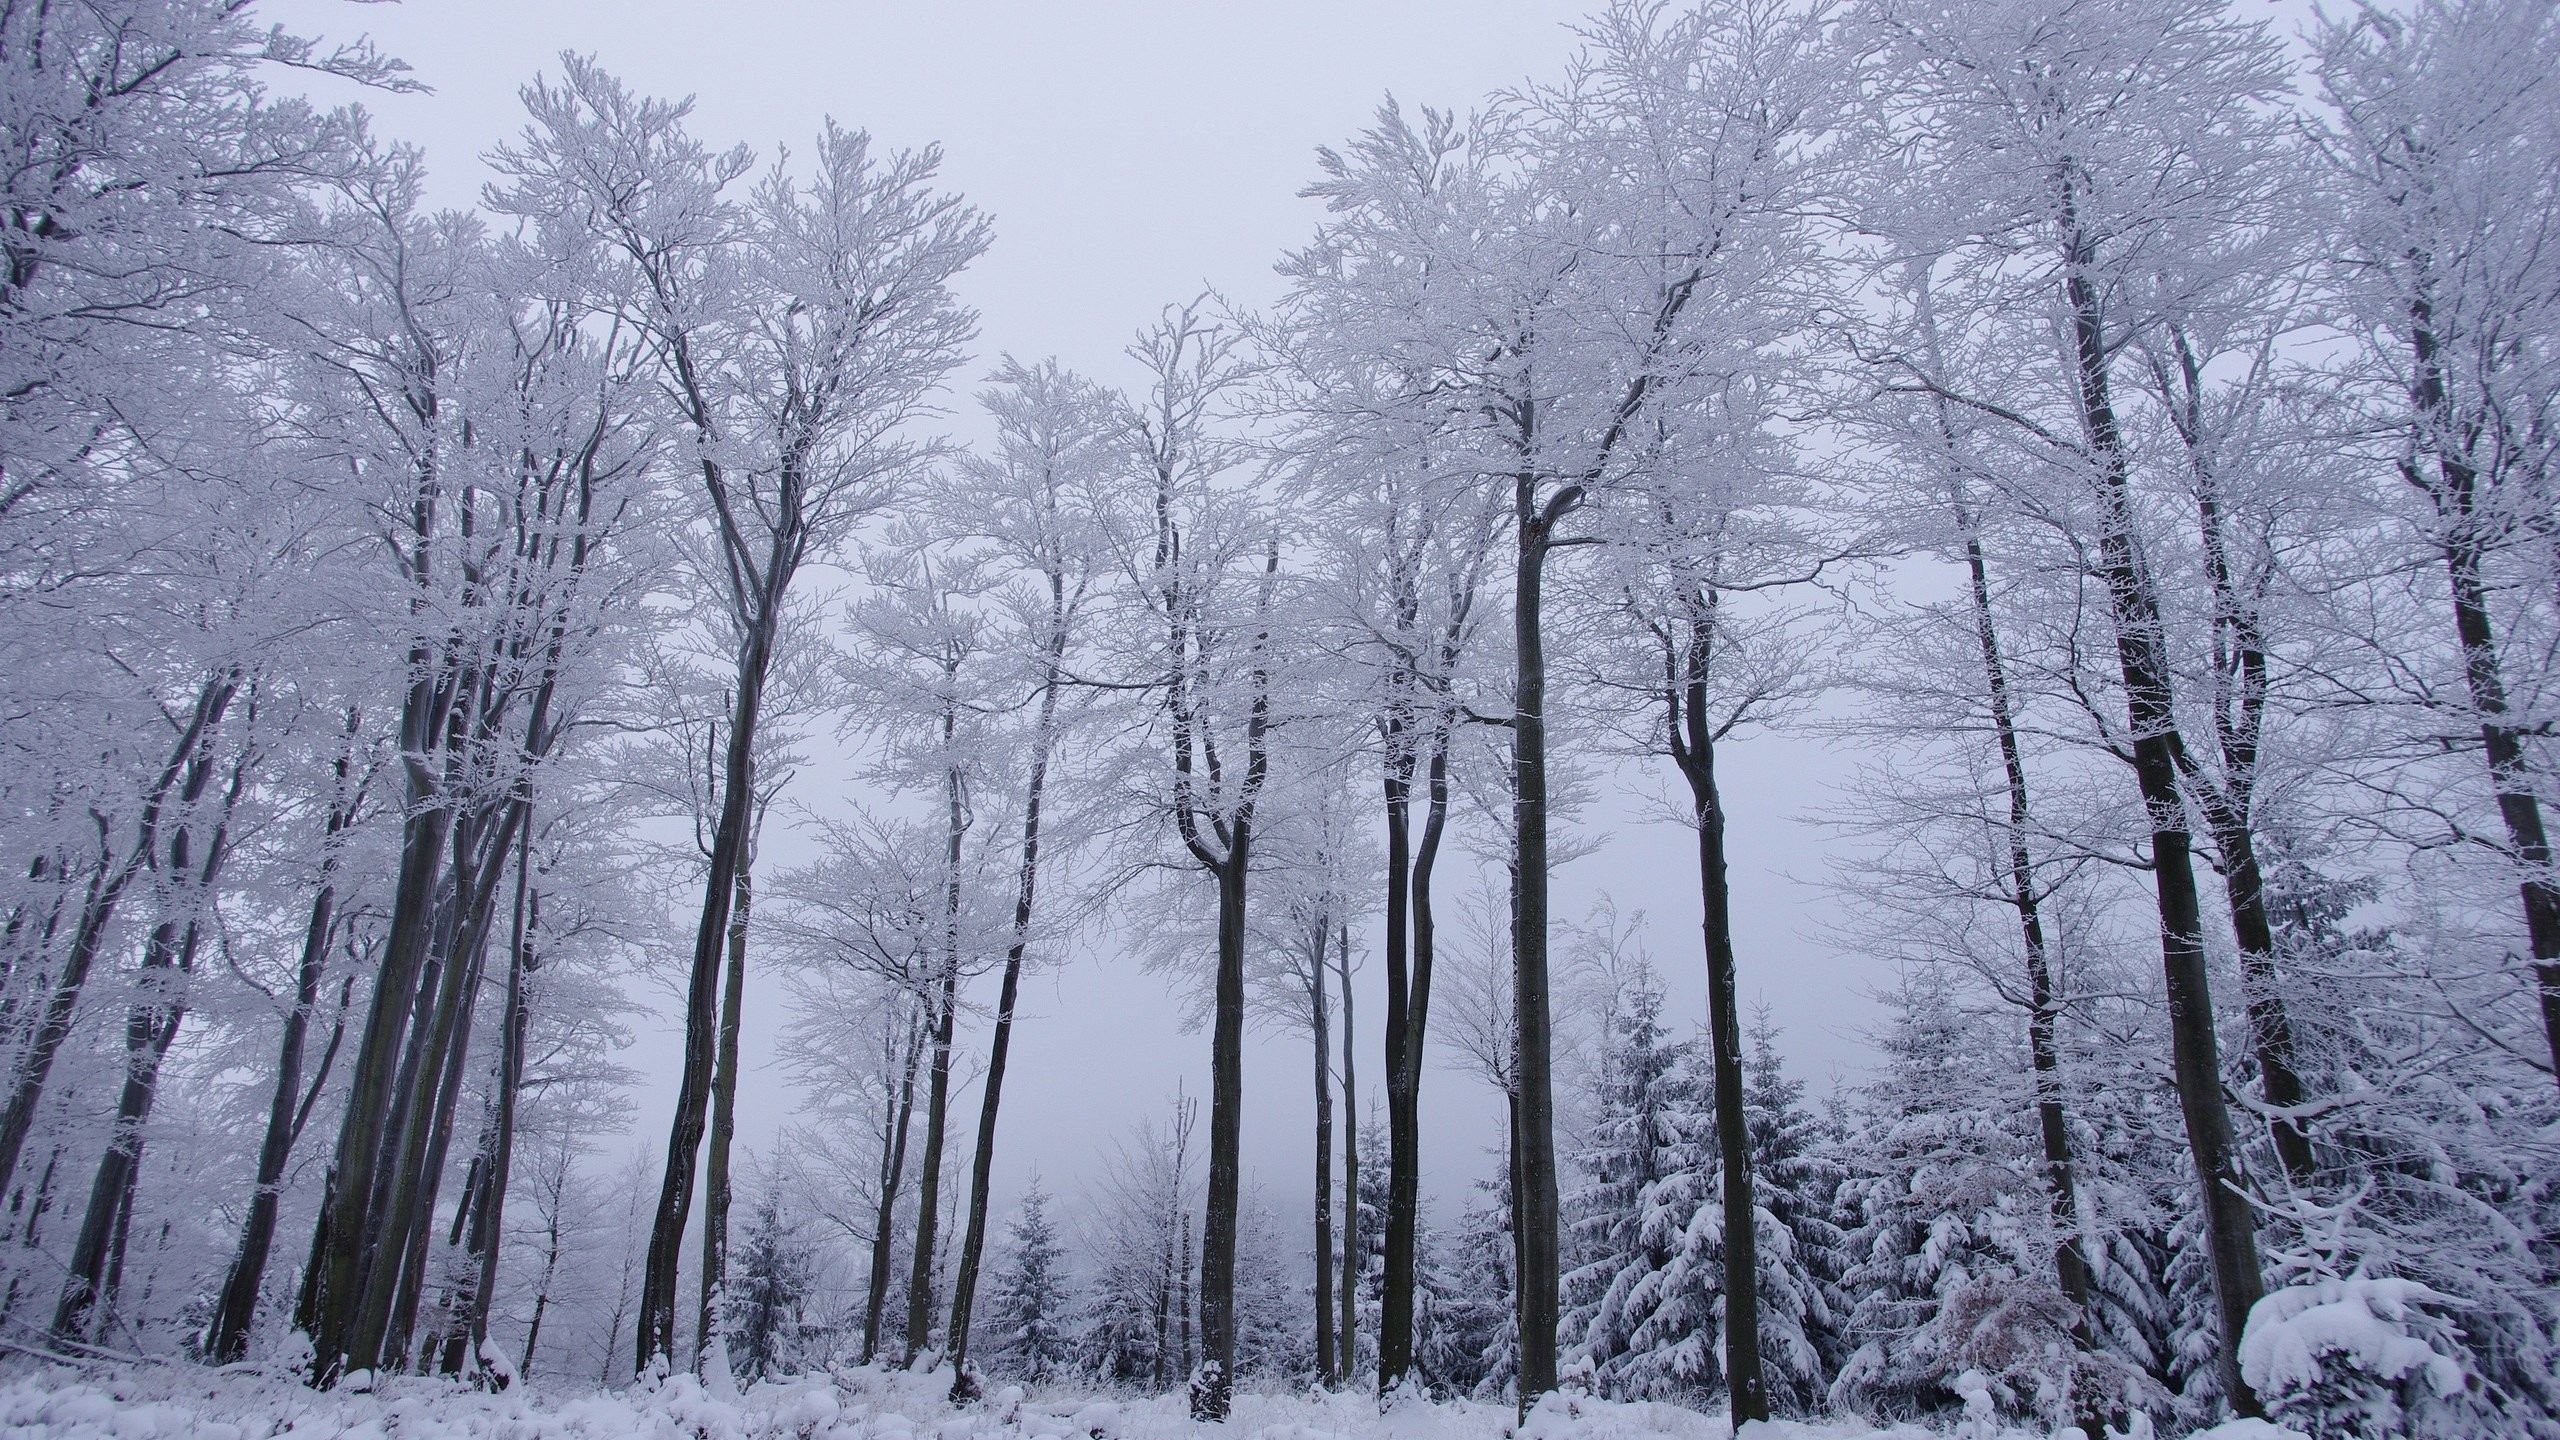 background winter scene 2560x1440. Winter forest, Landscape, Winter trees